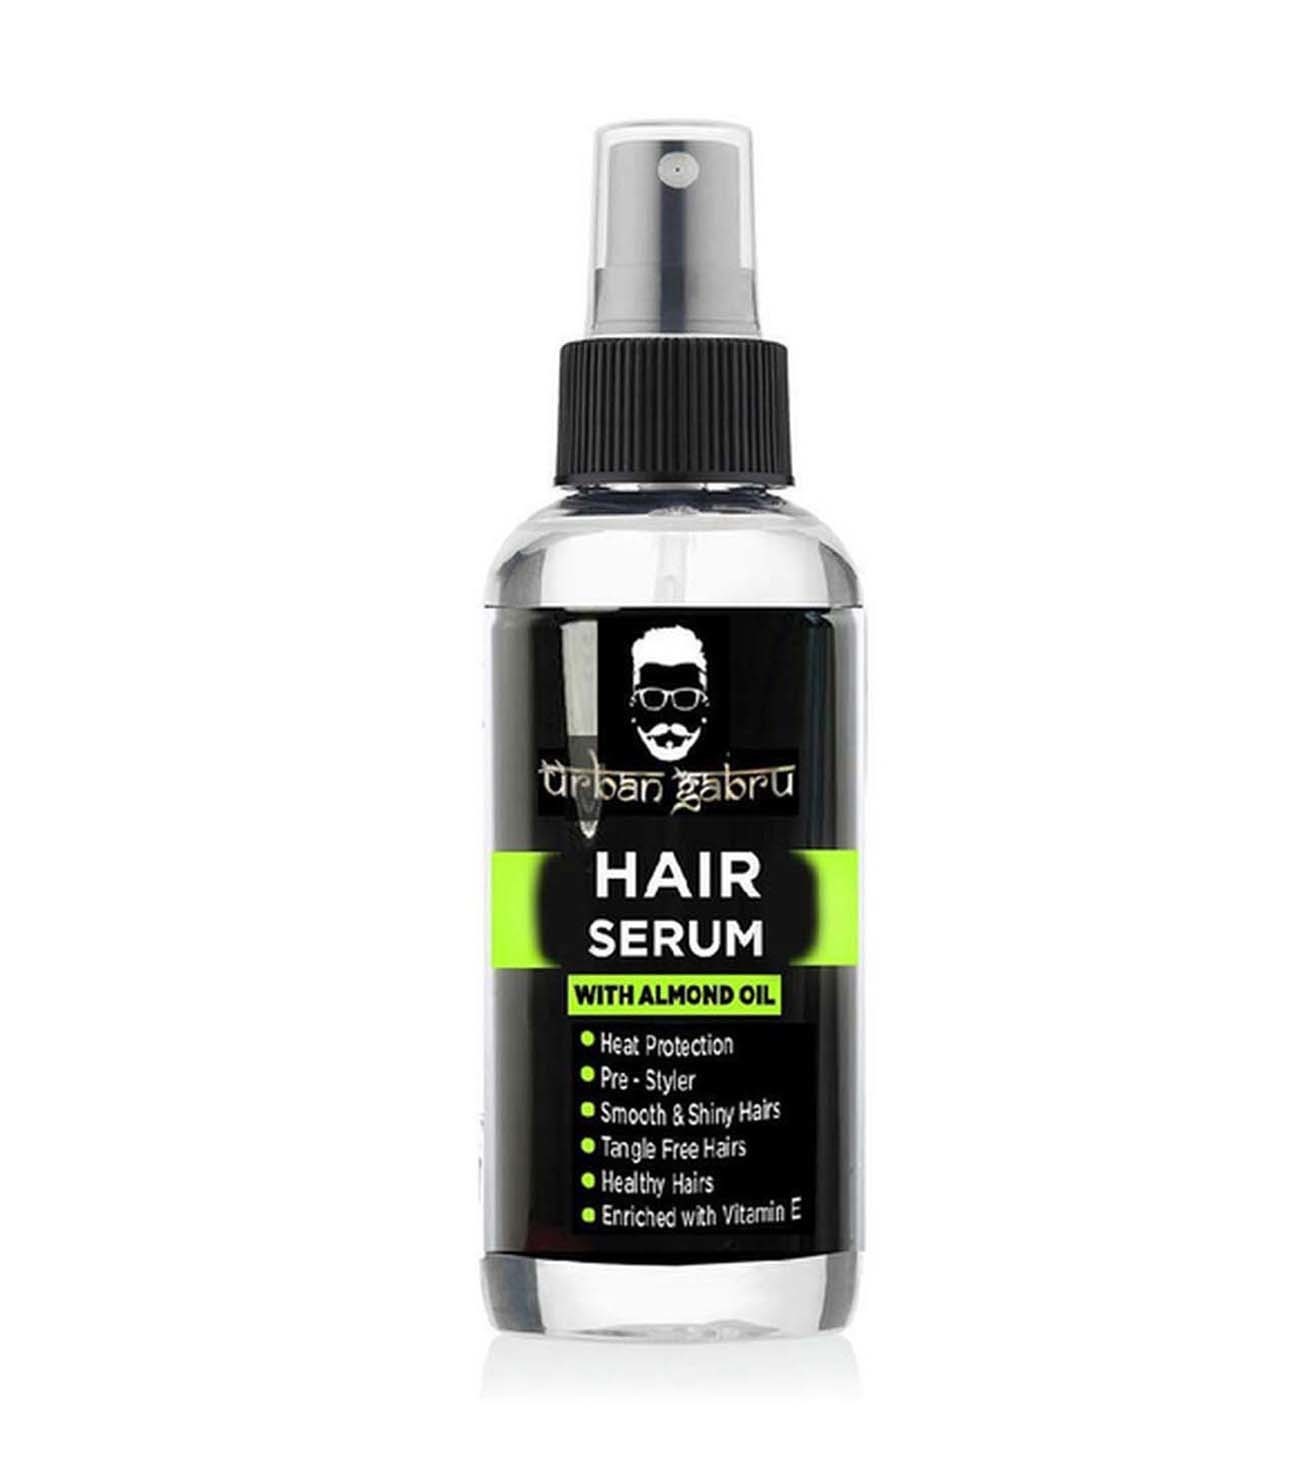 UrbanGabru Hair Serum with Almond Oil - 100 ml from UrbanGabru at best  prices on Tata Beauty